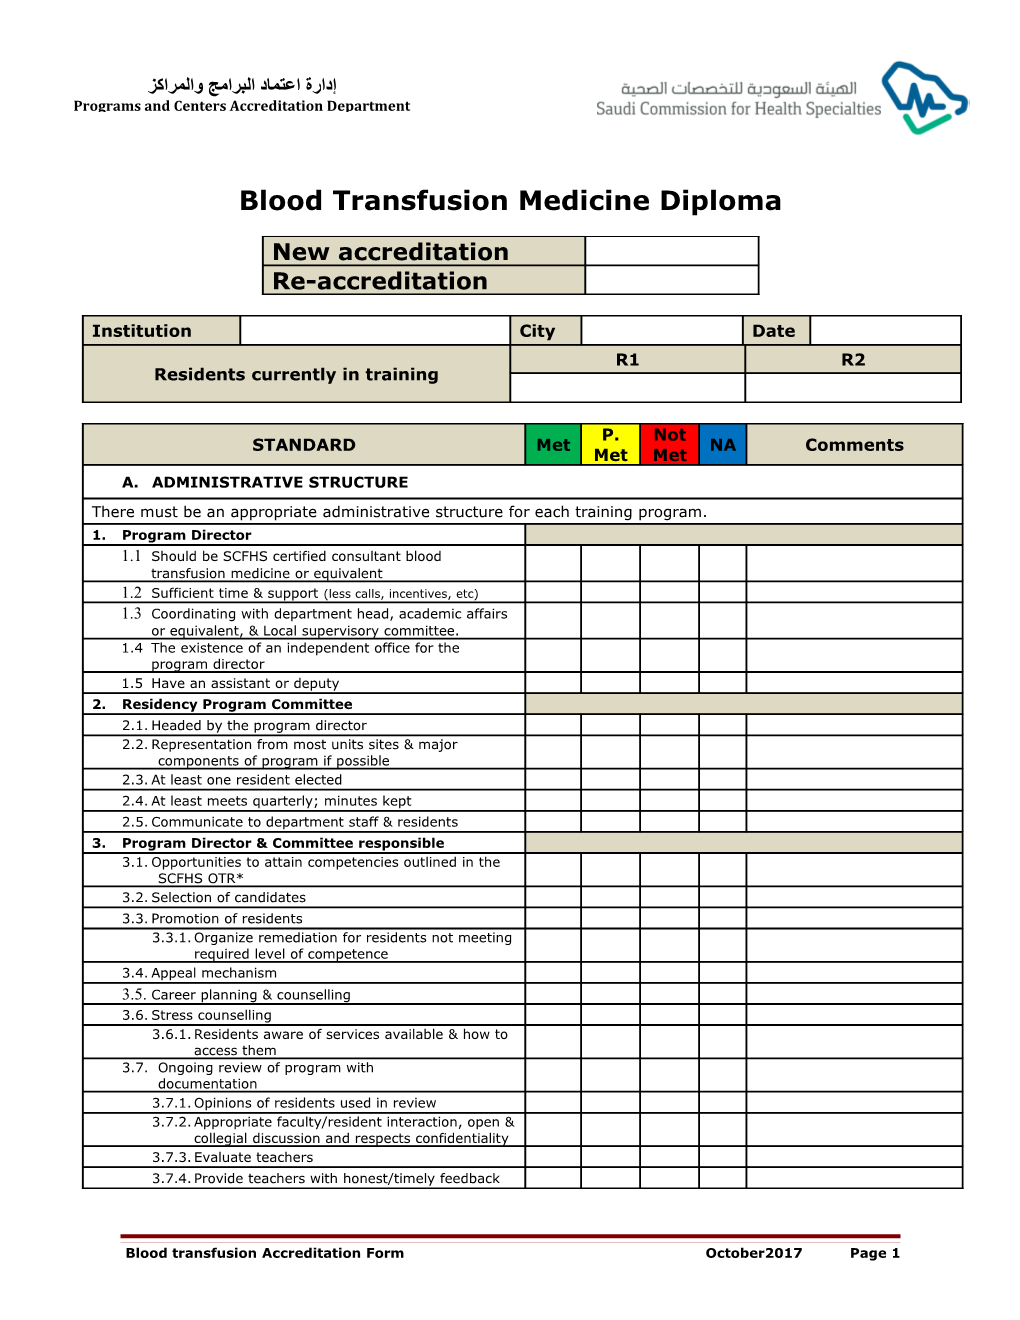 Blood Transfusion Accreditation Form 2016